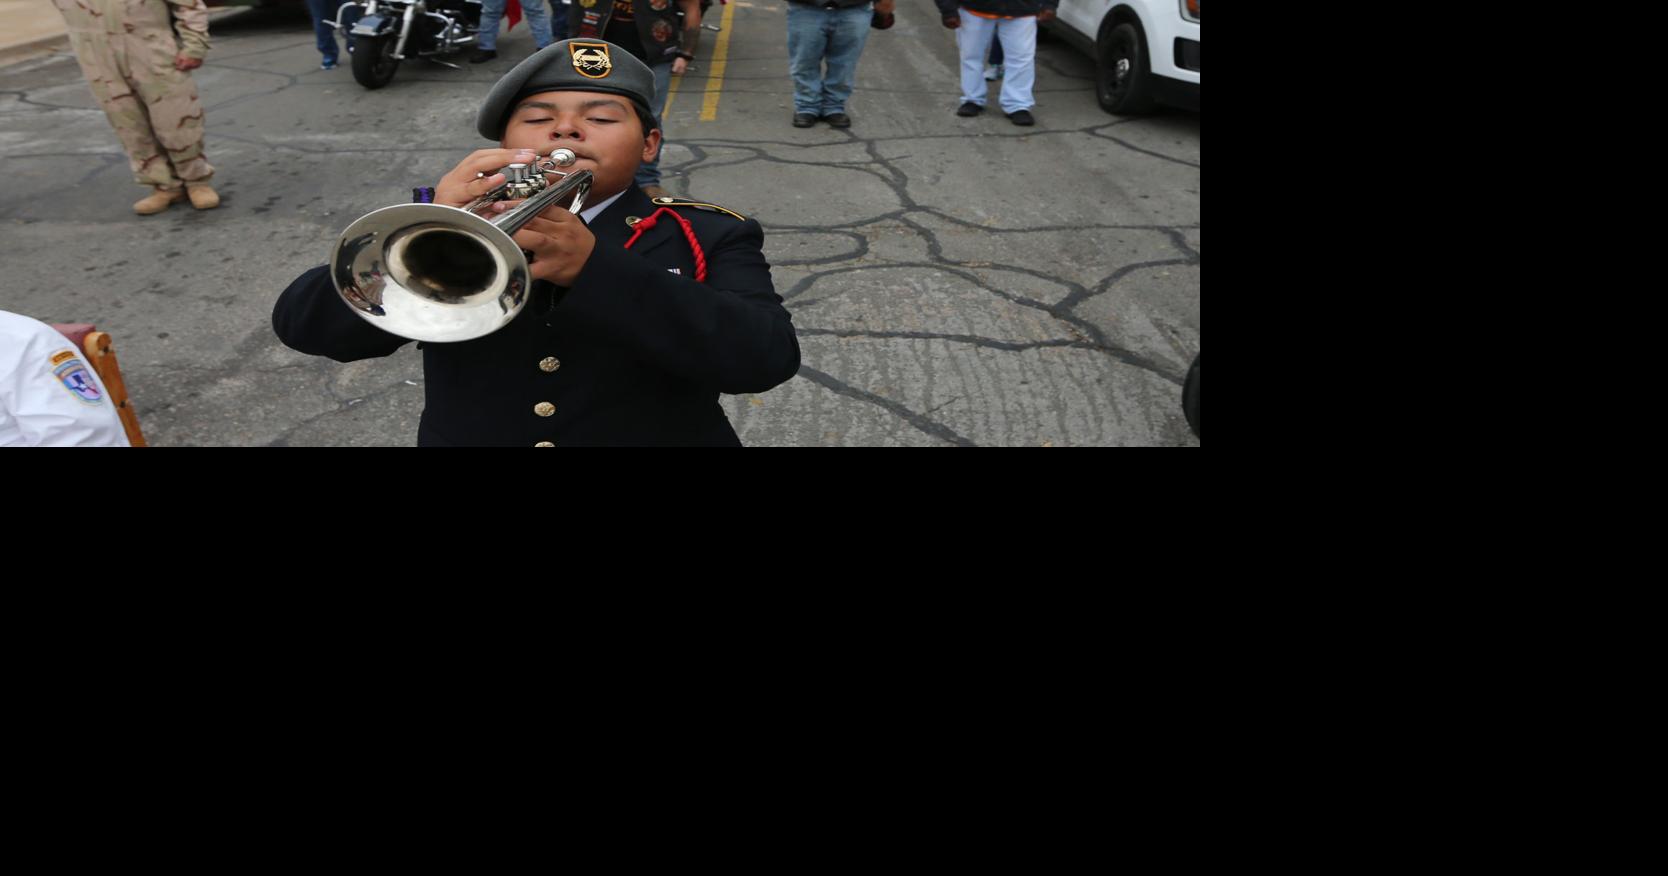 Wacoarea news briefs Veterans Day parade begins at 11 downtown